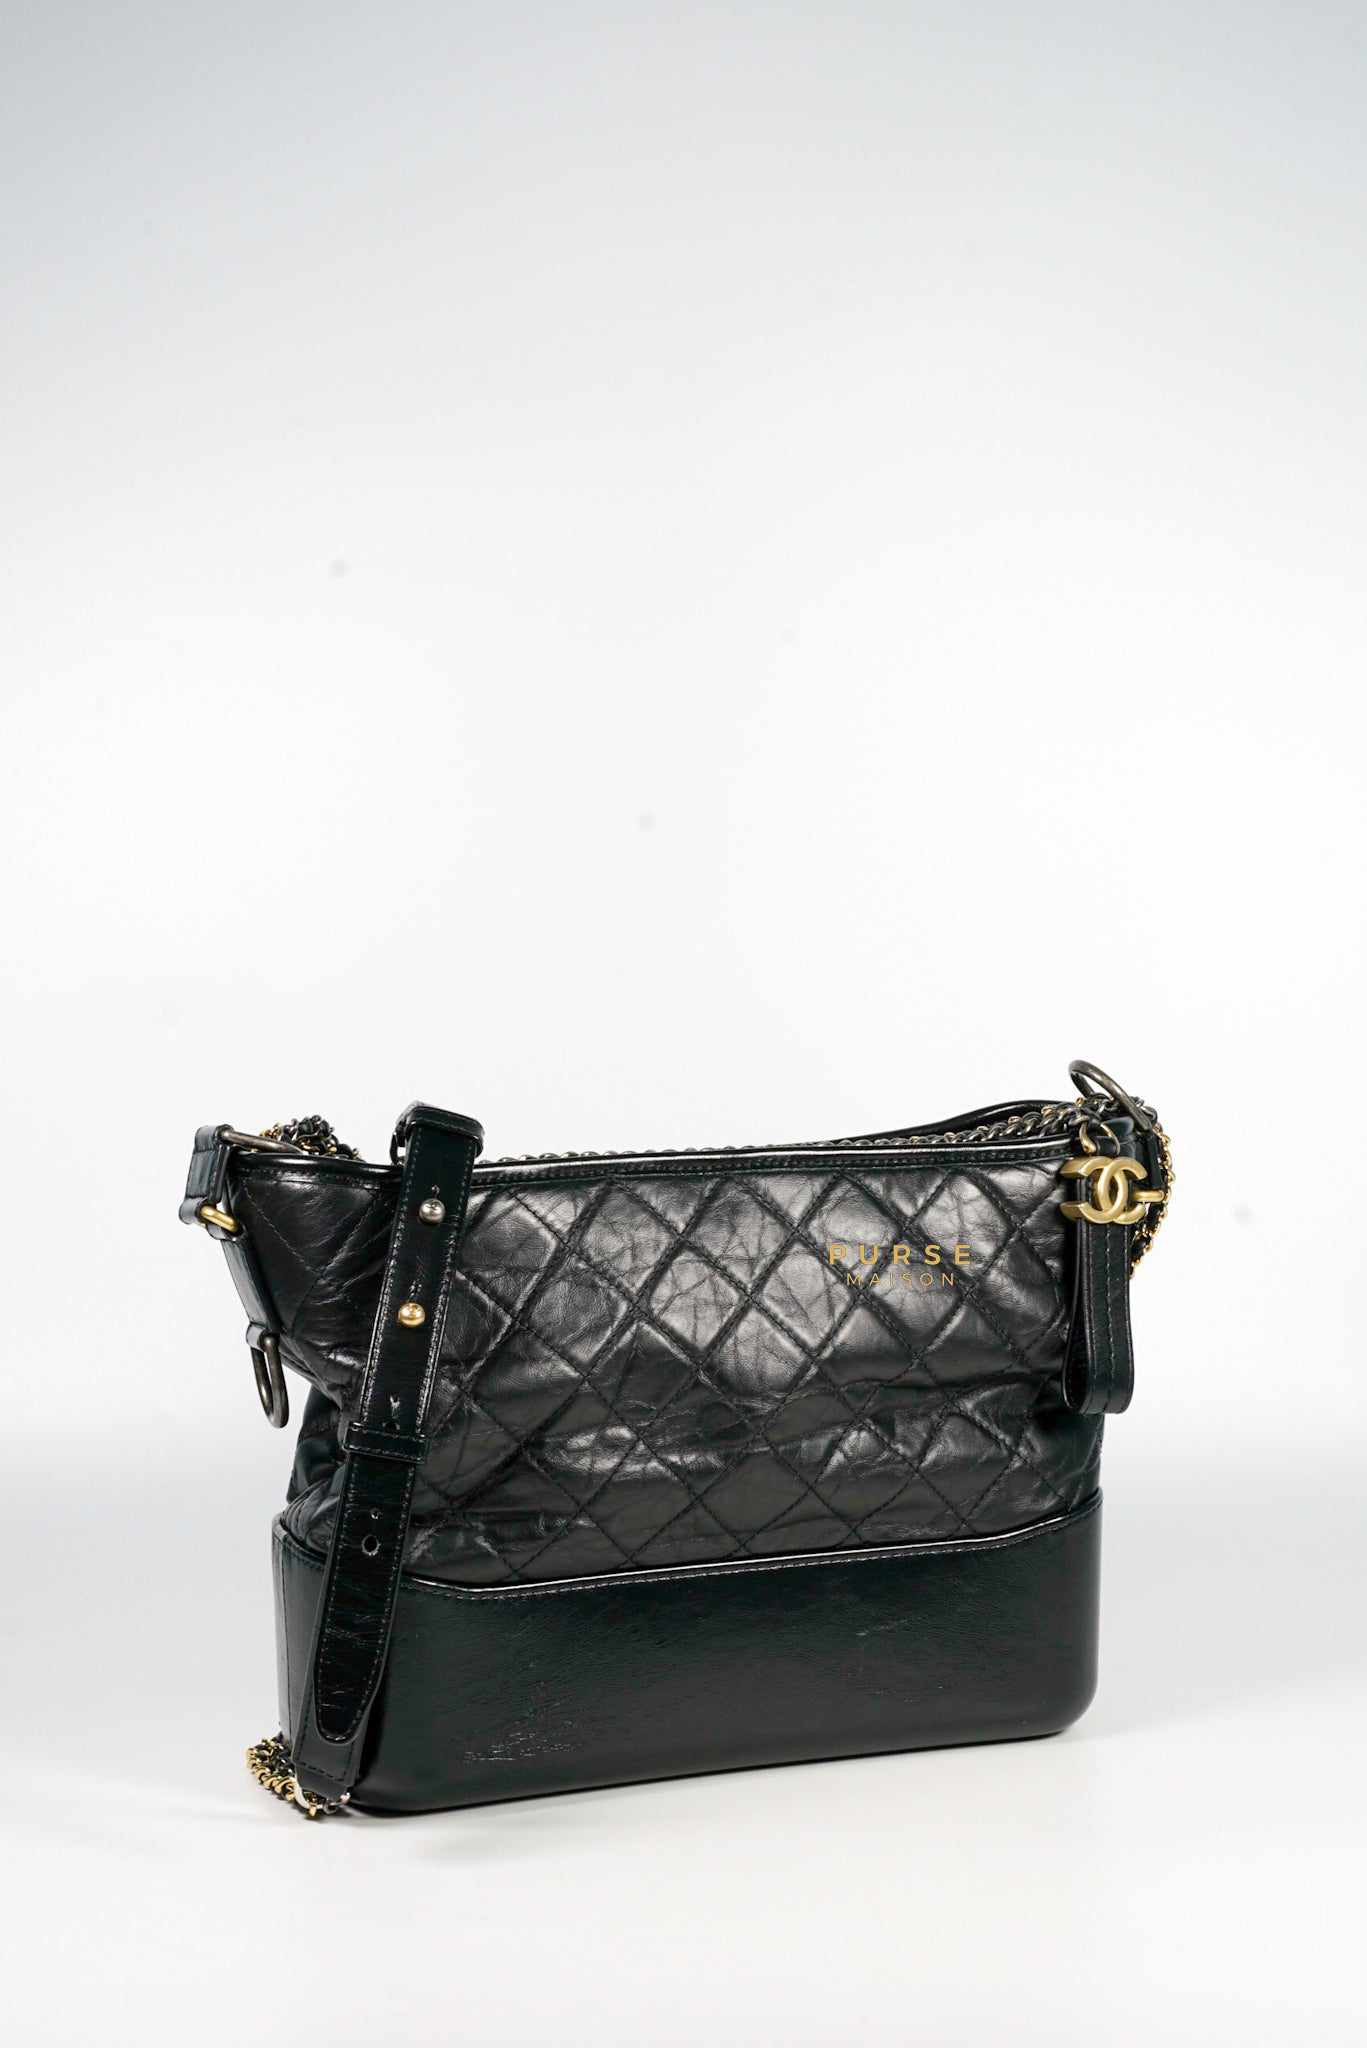 Chanel Medium Filigree Vanity Case - White Shoulder Bags, Handbags -  CHA924471